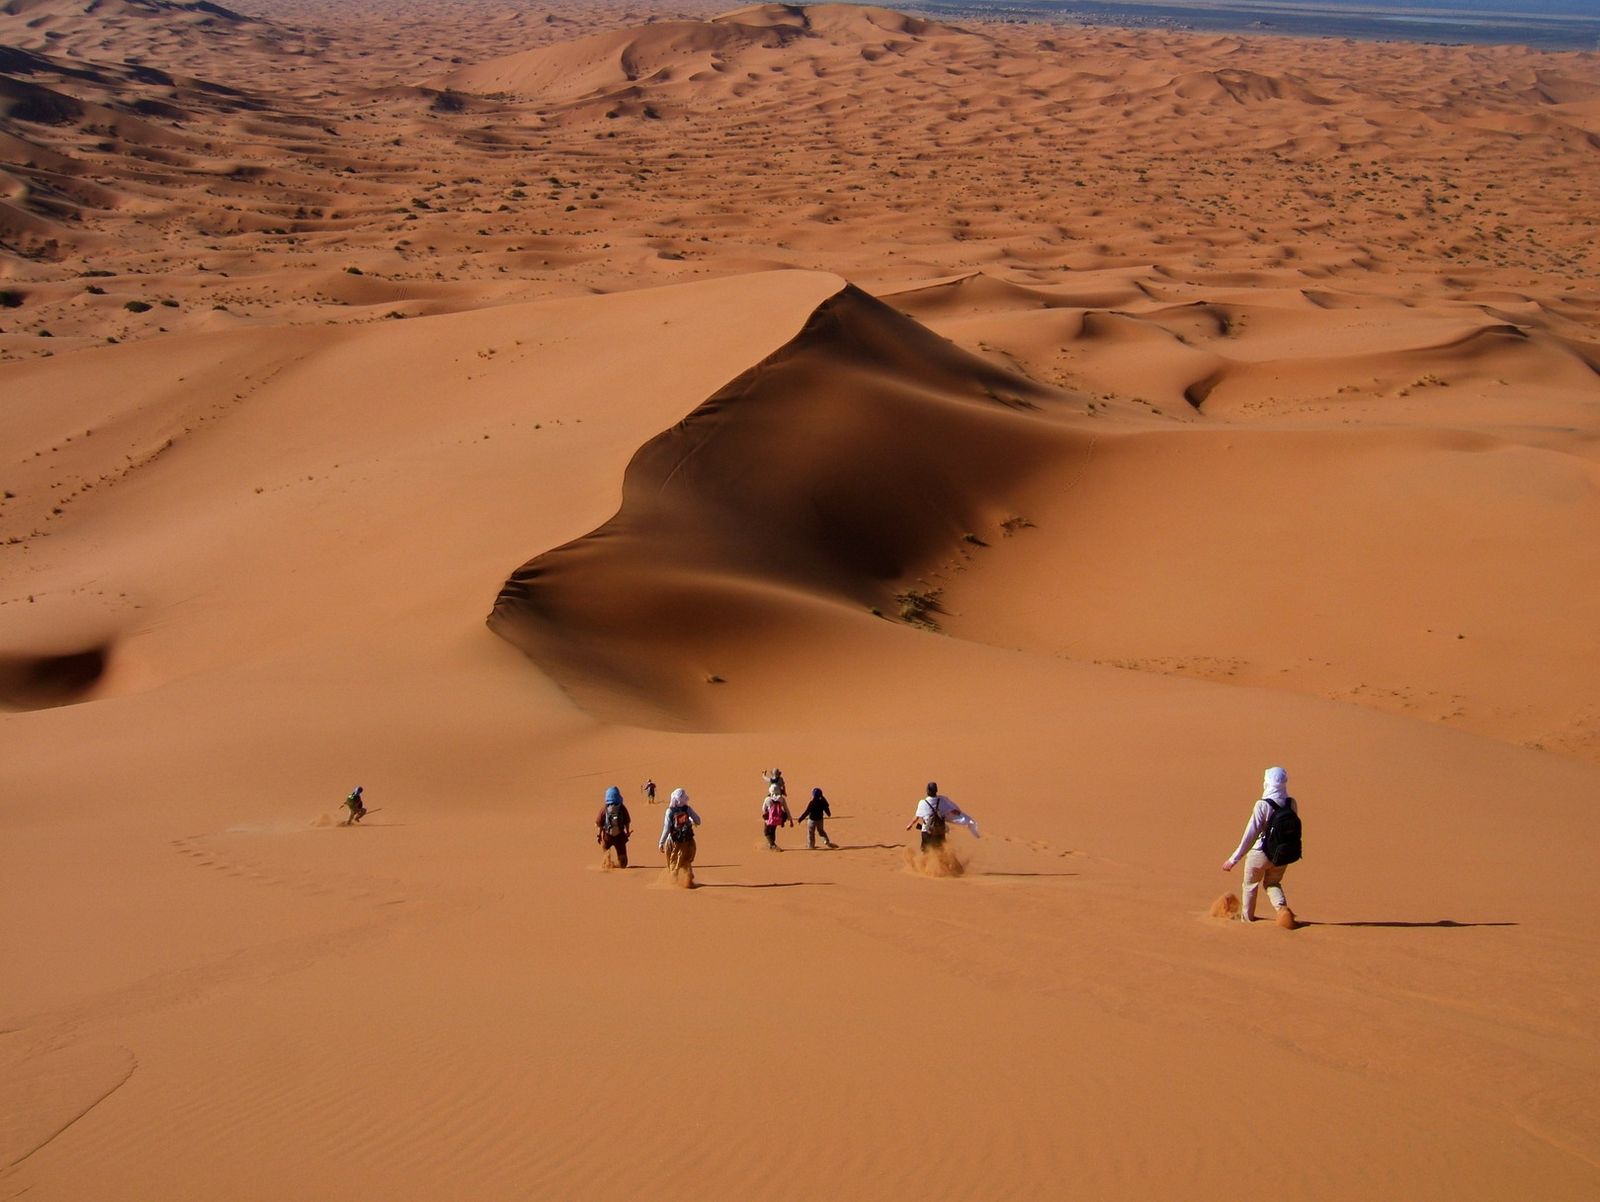 Marrakech Excurions, Morocco desert Tour from Marrakech to Merzouga | 3 Days